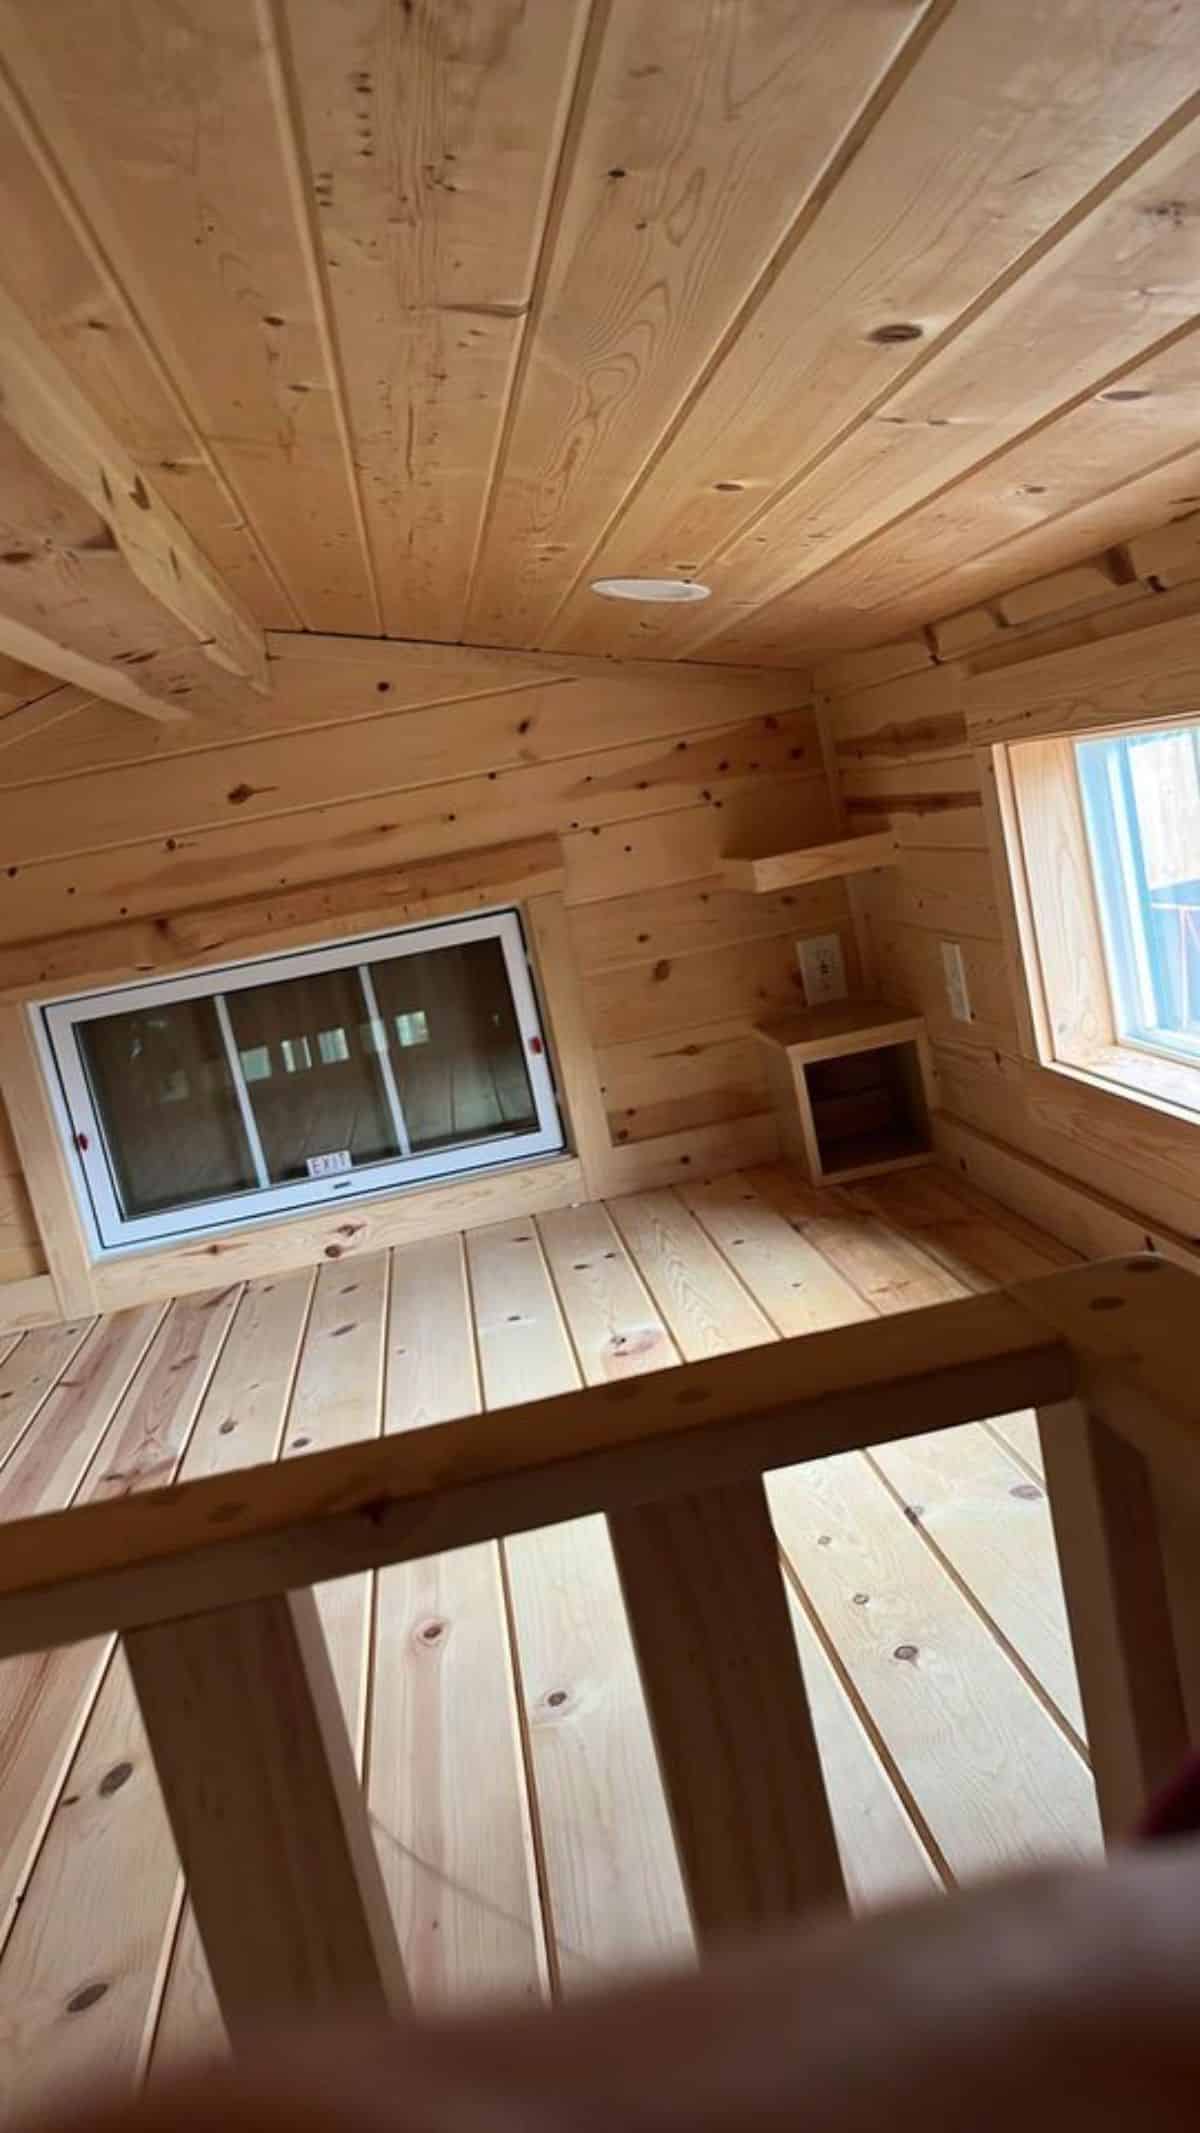 loft bedroom is spacious with multiple windows